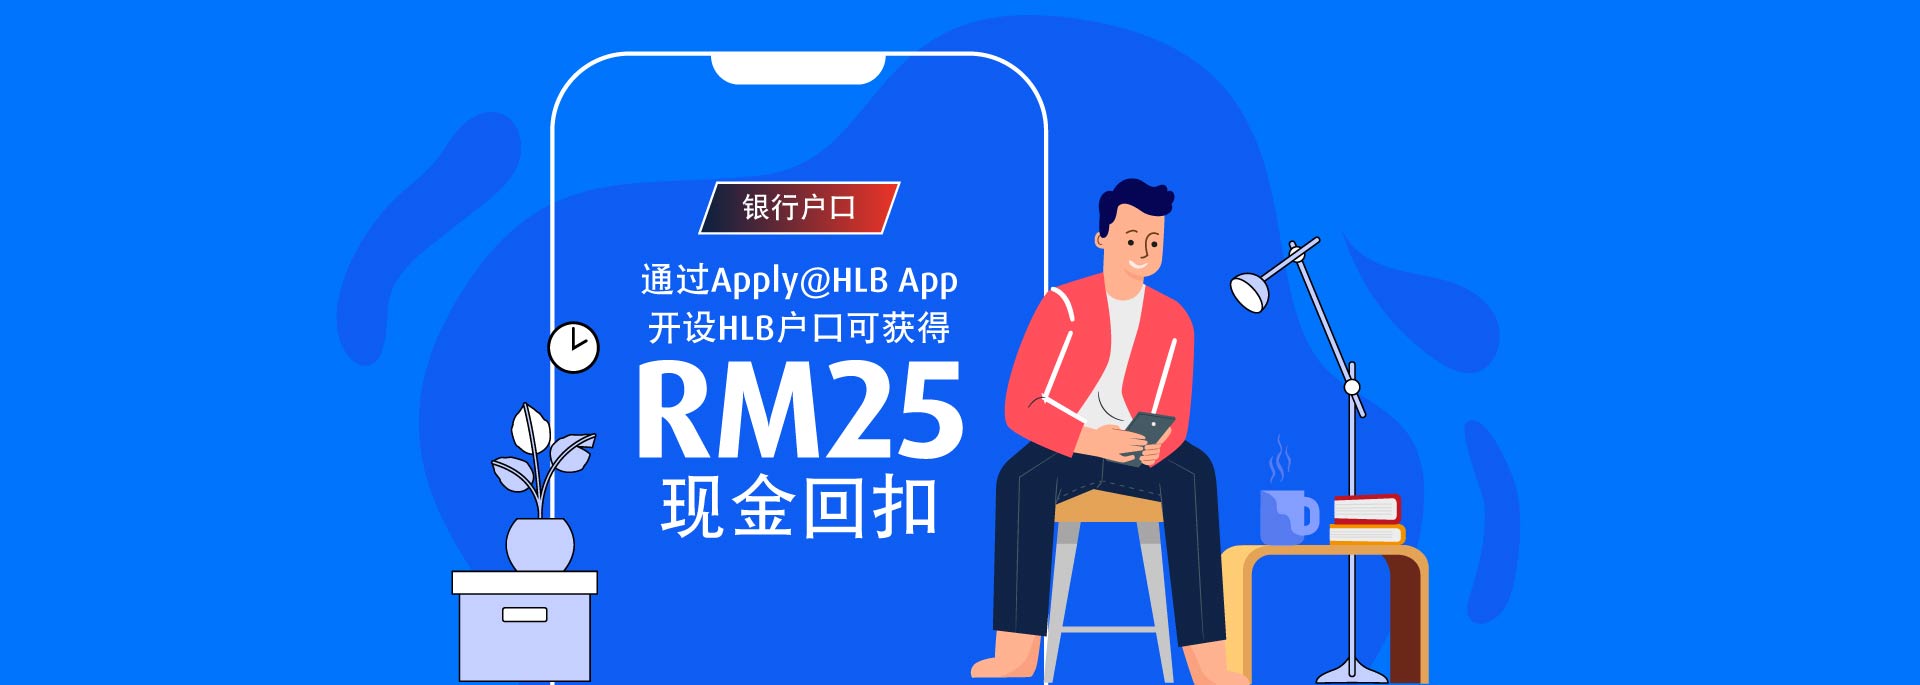 通过 Apply@HLB App 开设 HLB 户口可获得 RM25 现金回扣